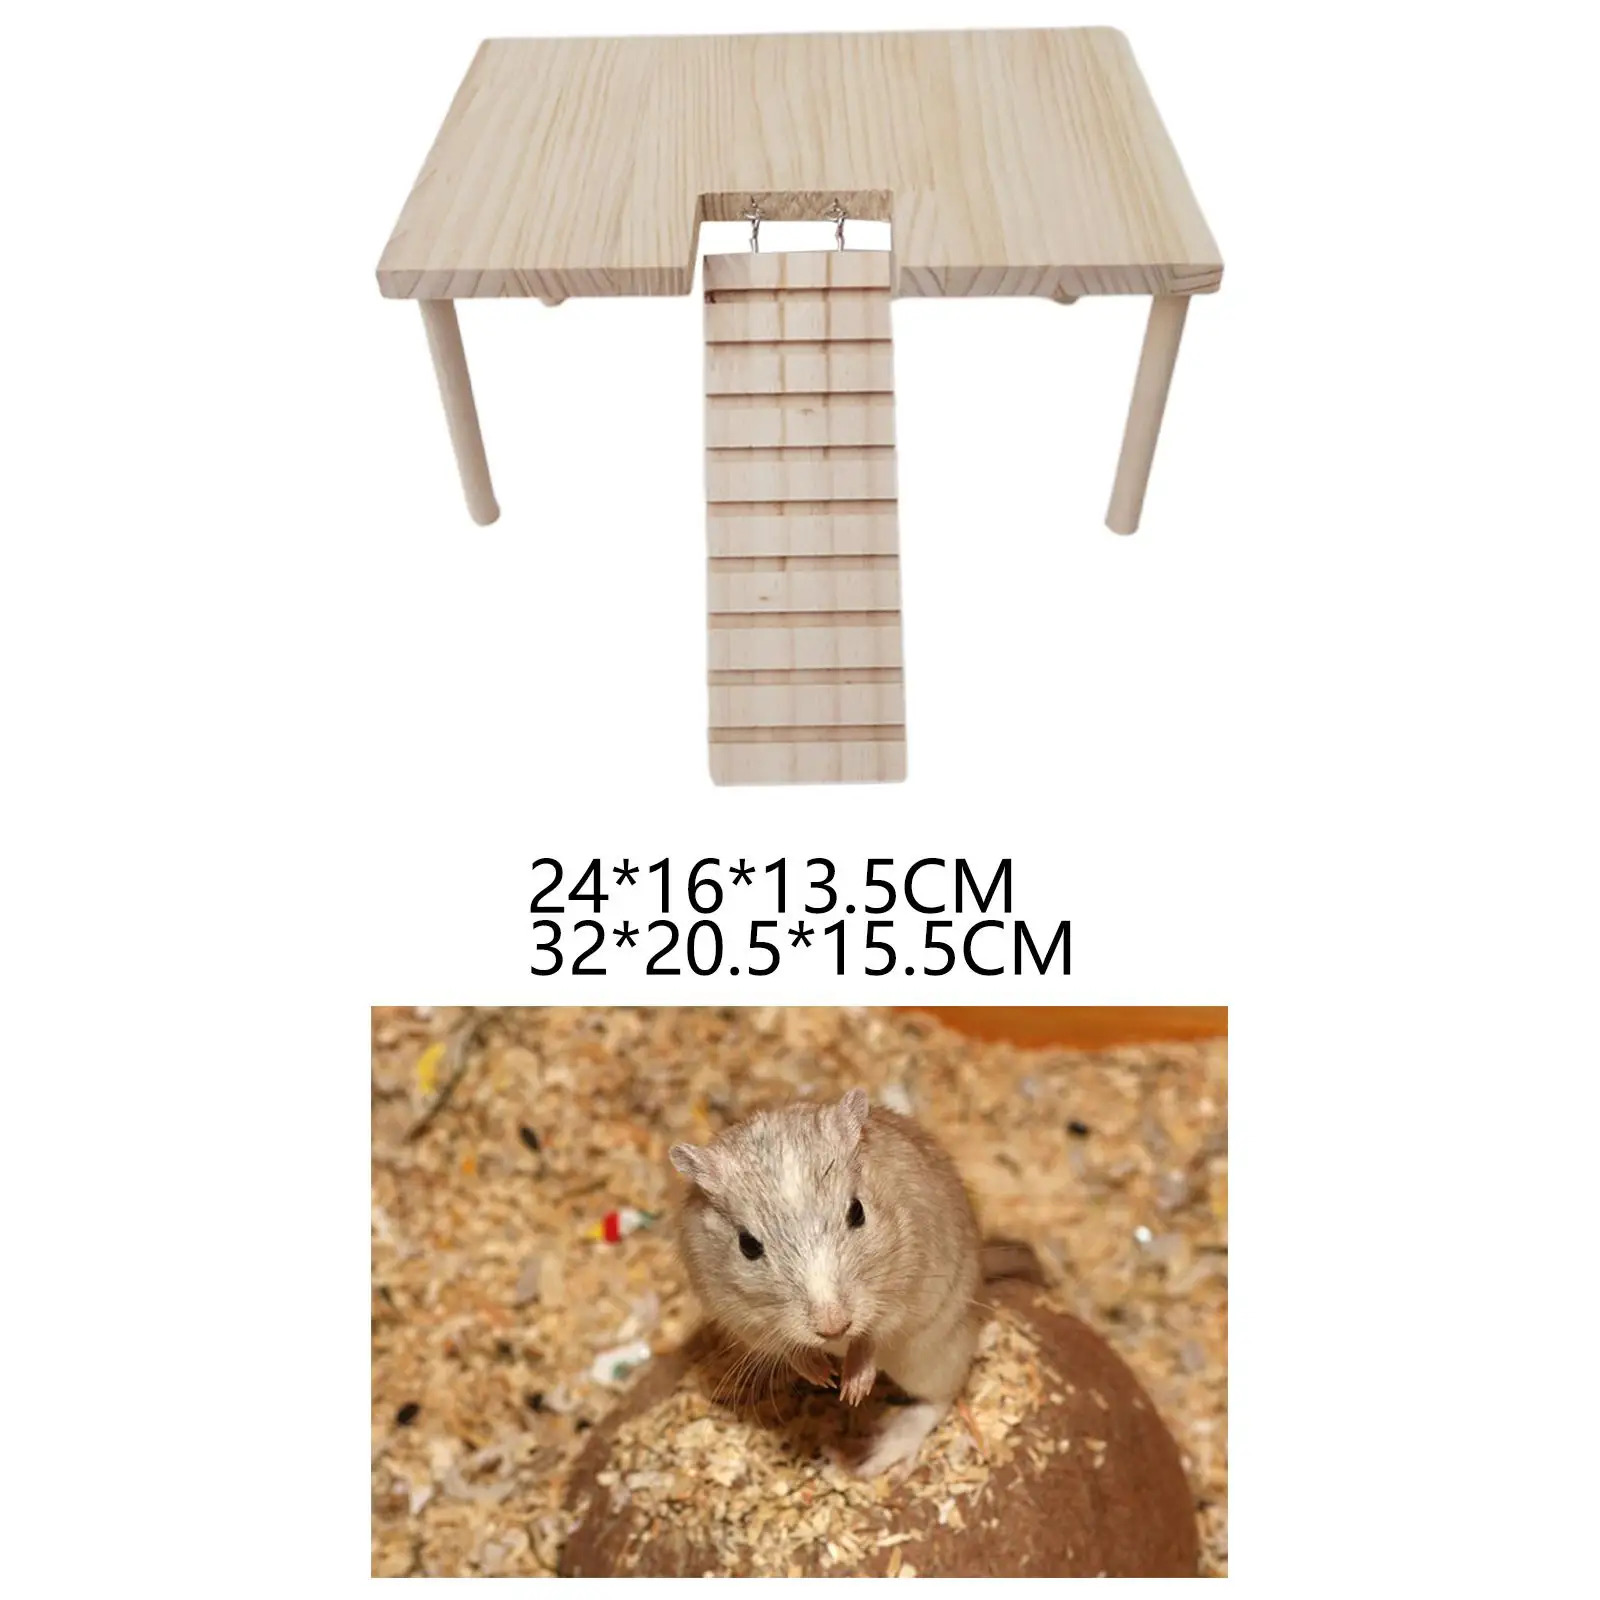 Wooden Small Animal Platform with Ladder Wooden Desk Stand Habitat Decoration